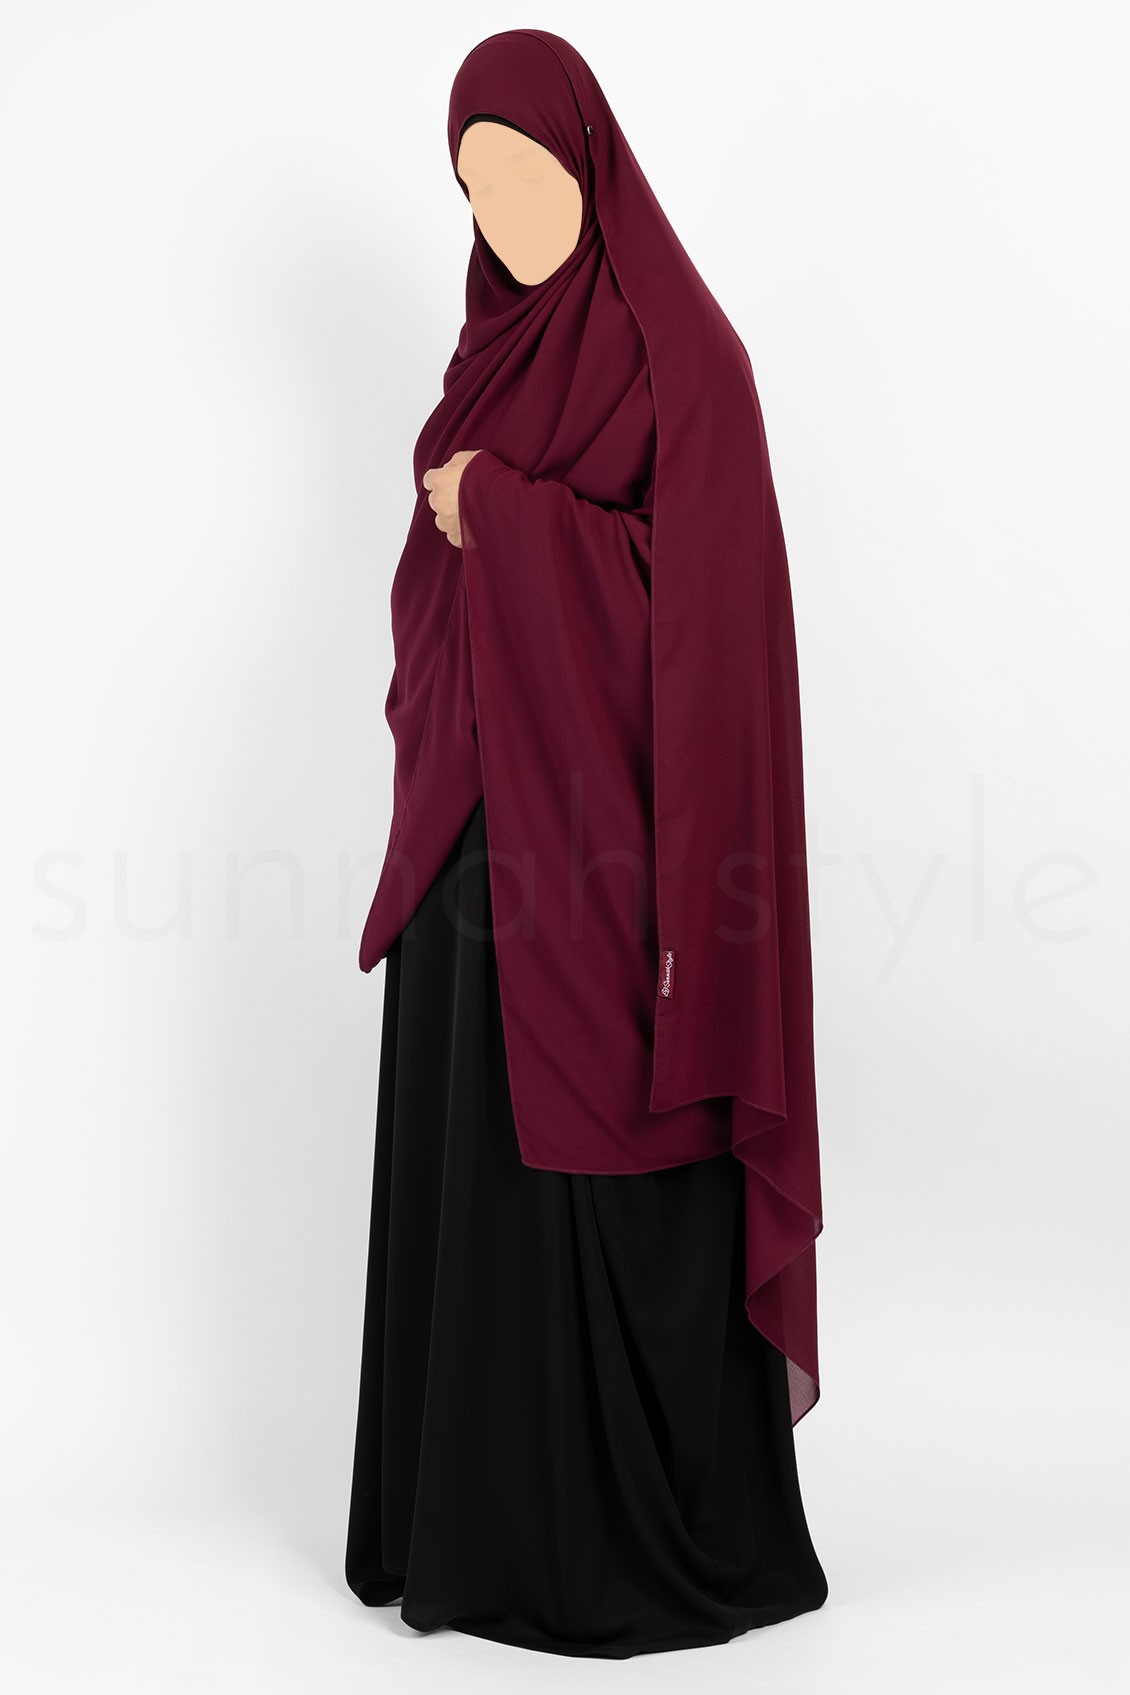 Sunnah Style Essentials Shayla - XXL Burgundy